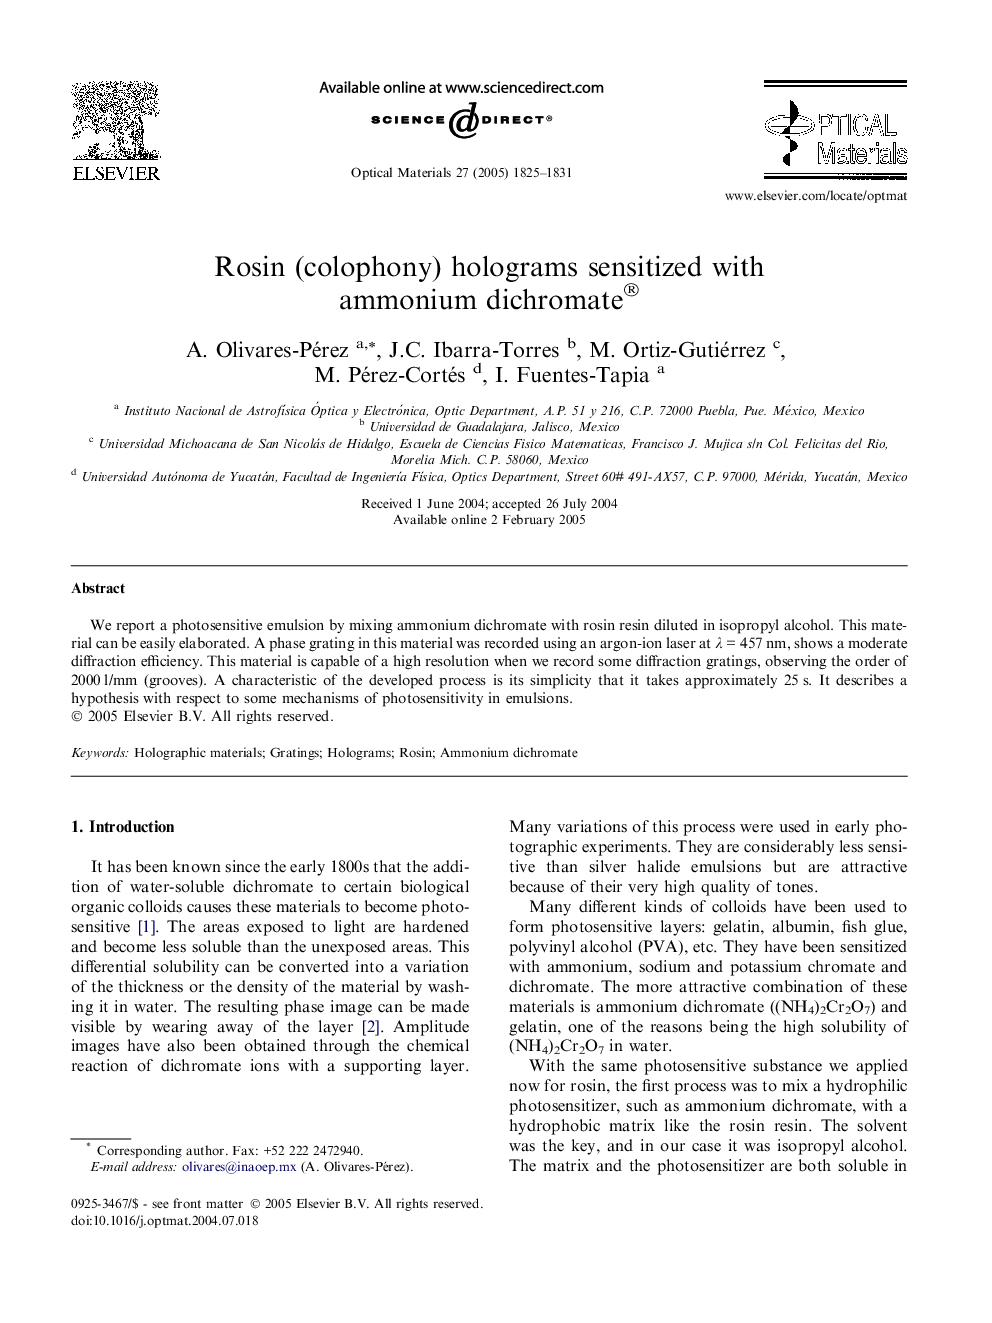 Rosin (colophony) holograms sensitized with ammonium dichromate®